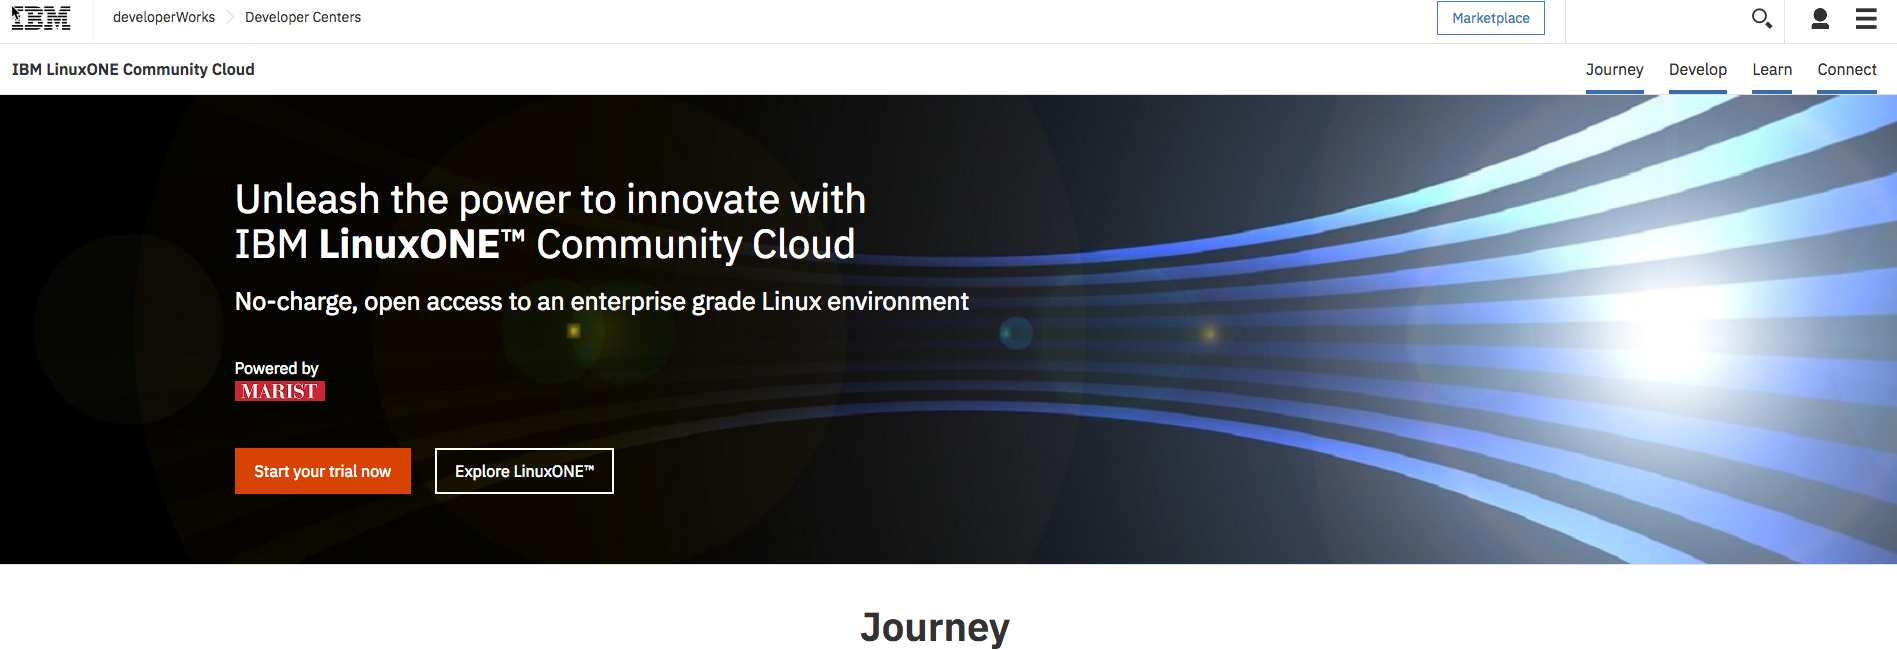 LinuxONE Community Cloud Page